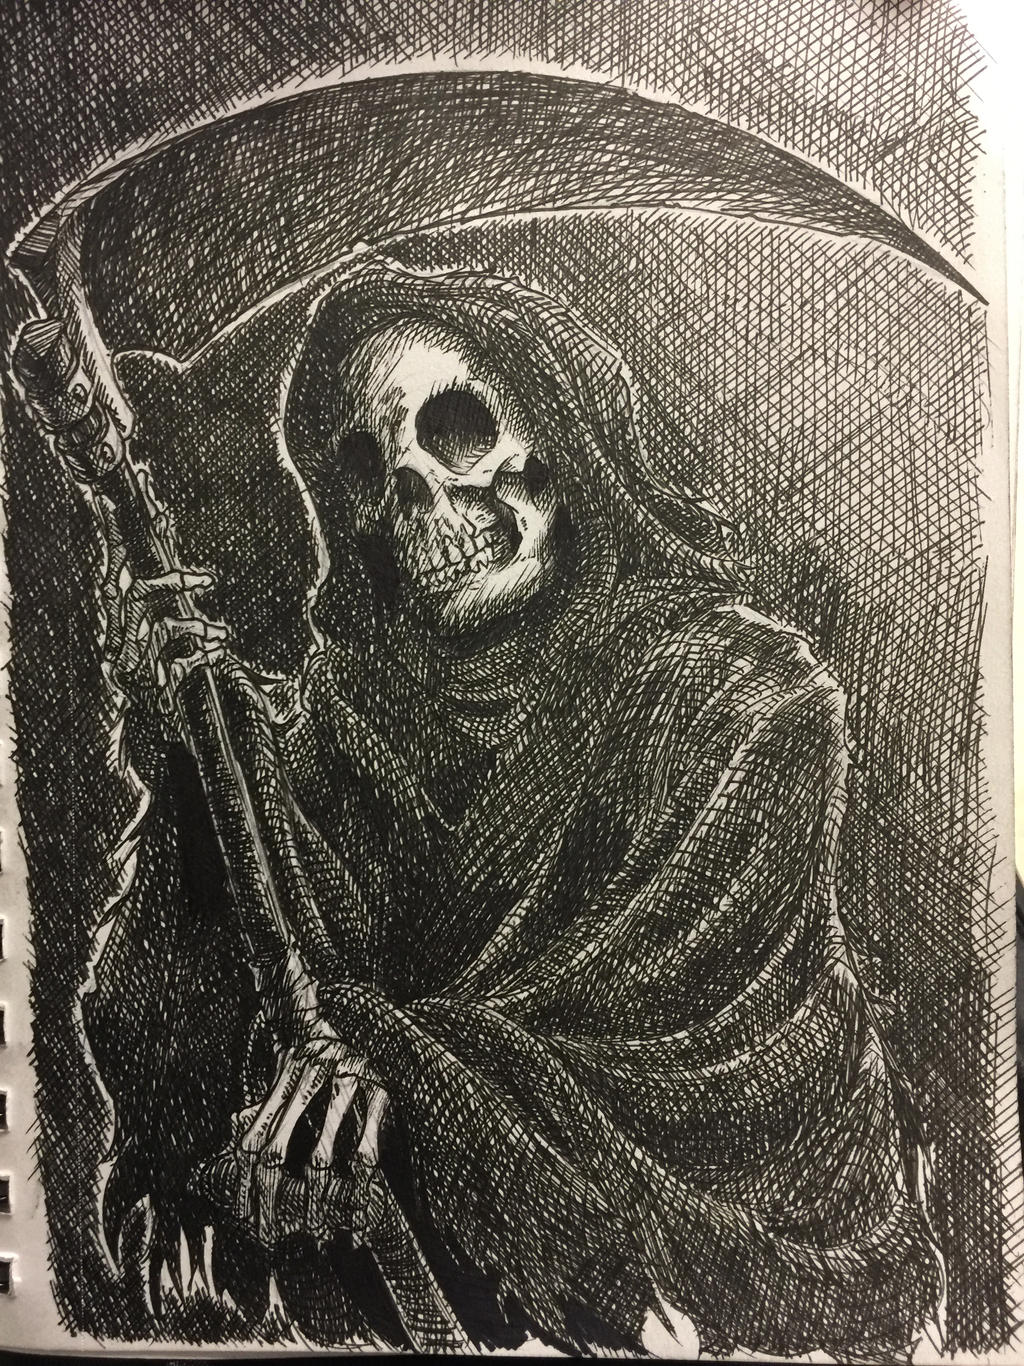 INKTOBER: The Reaper